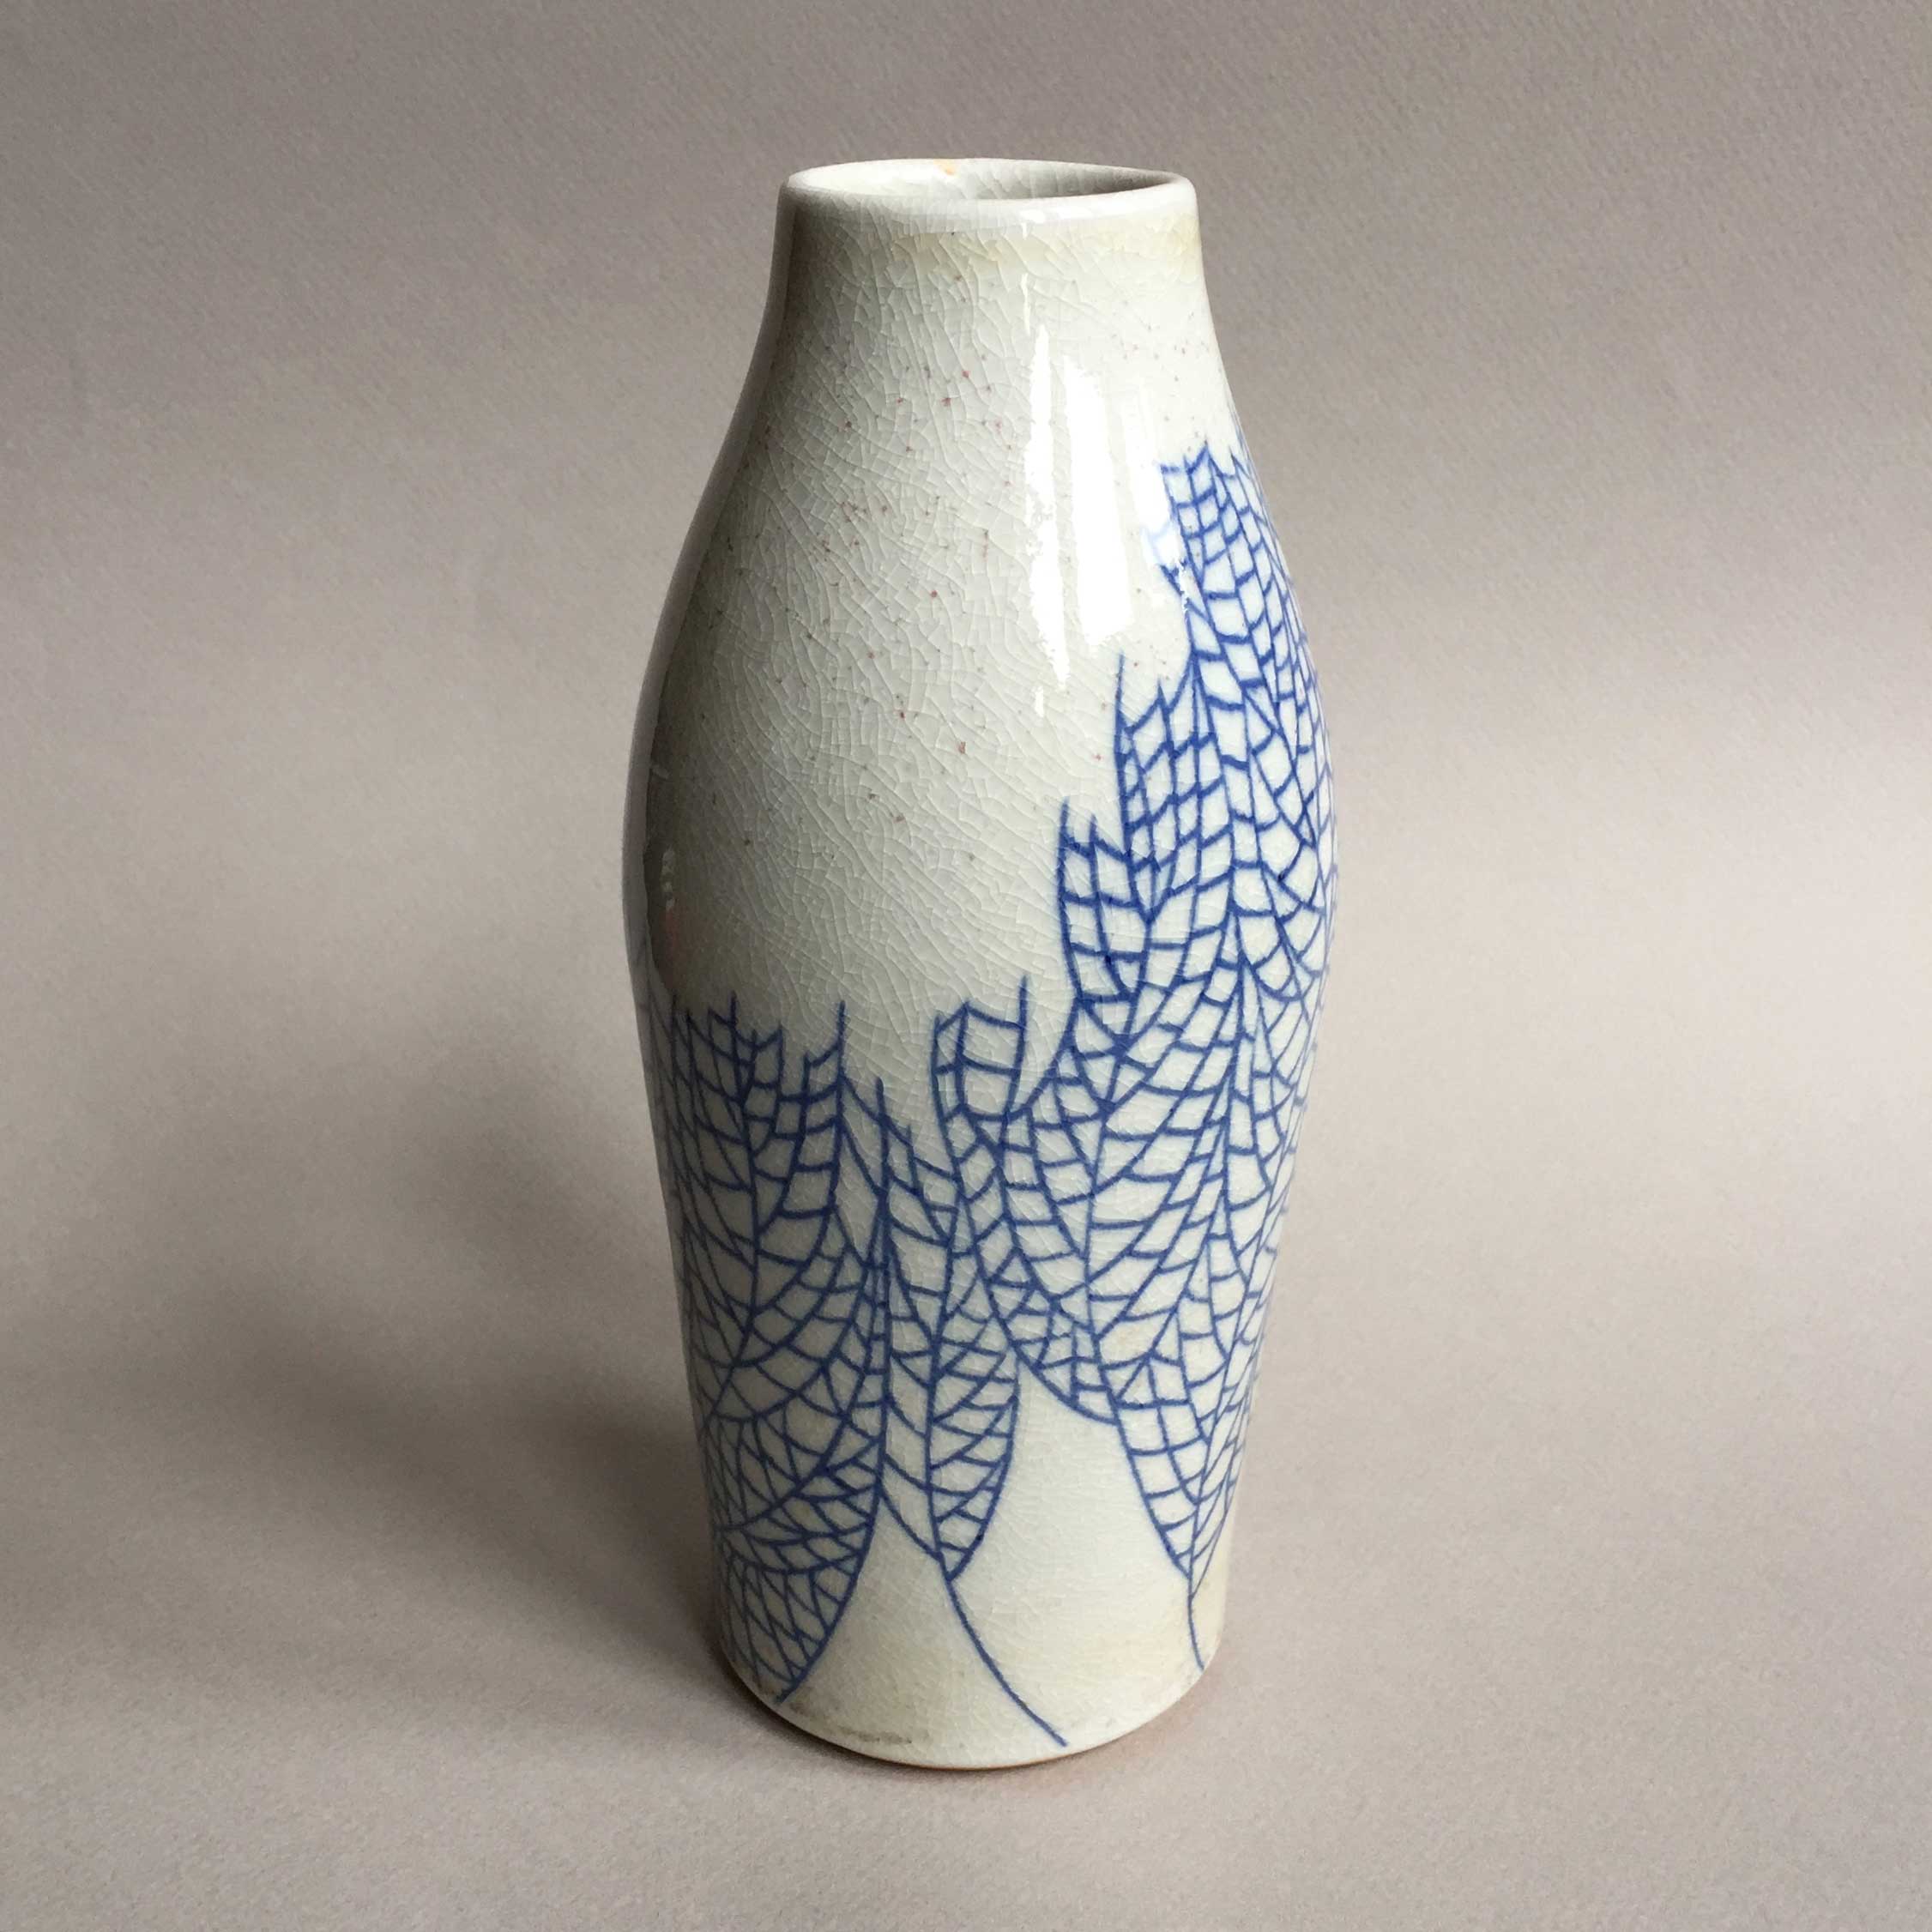 Clay: Sea Fan Vase